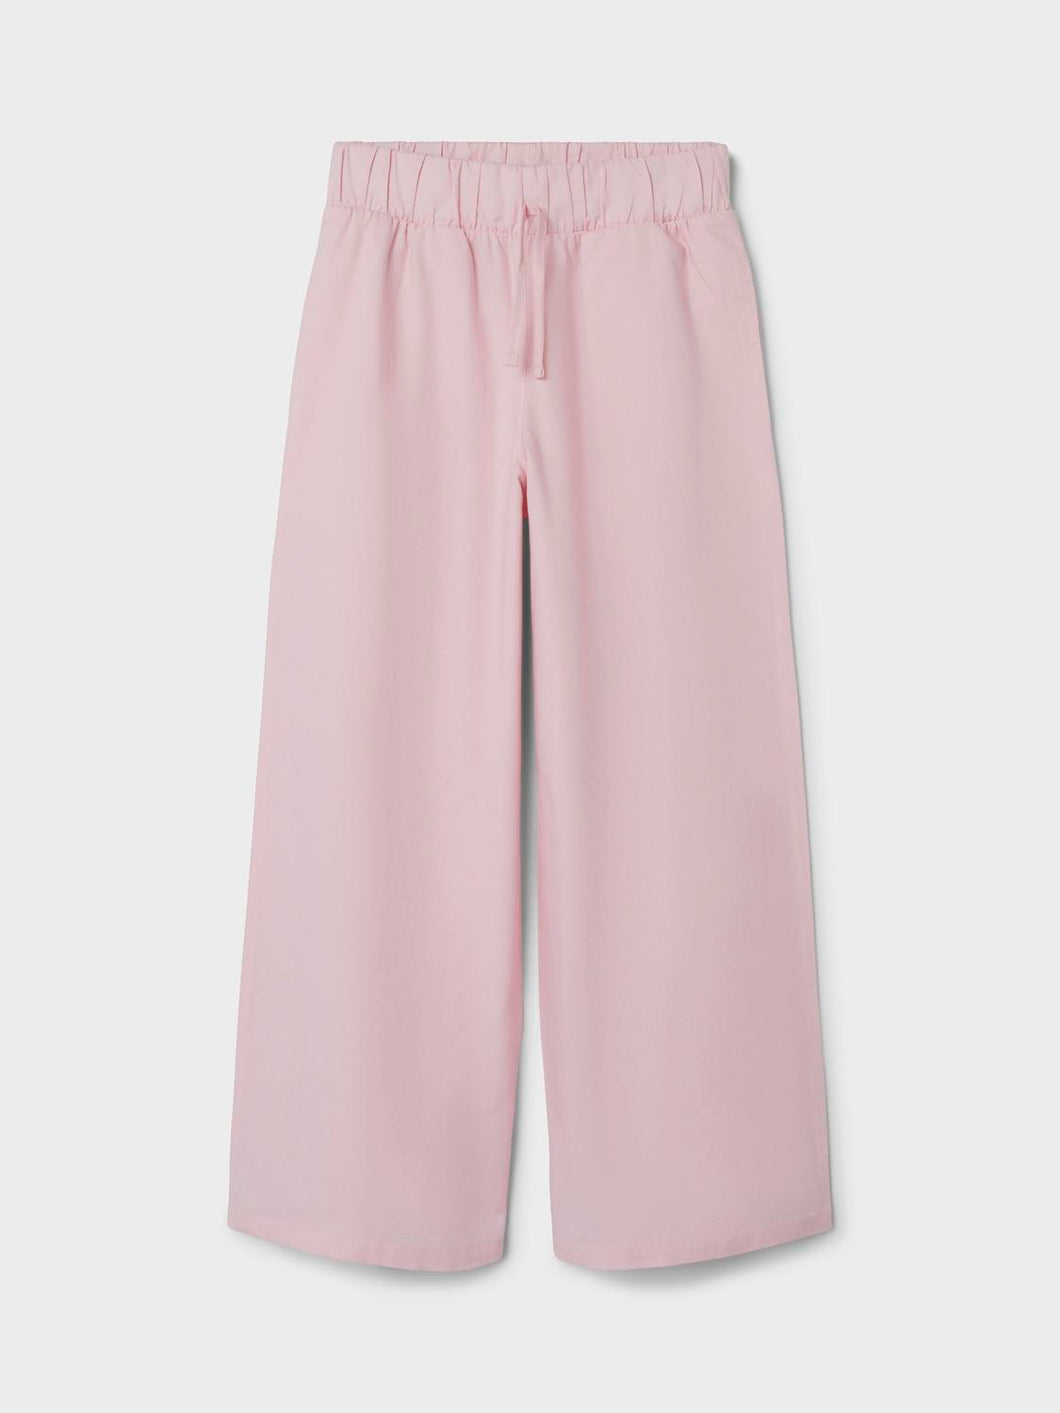 NKFNETOP Trousers - Parfait Pink